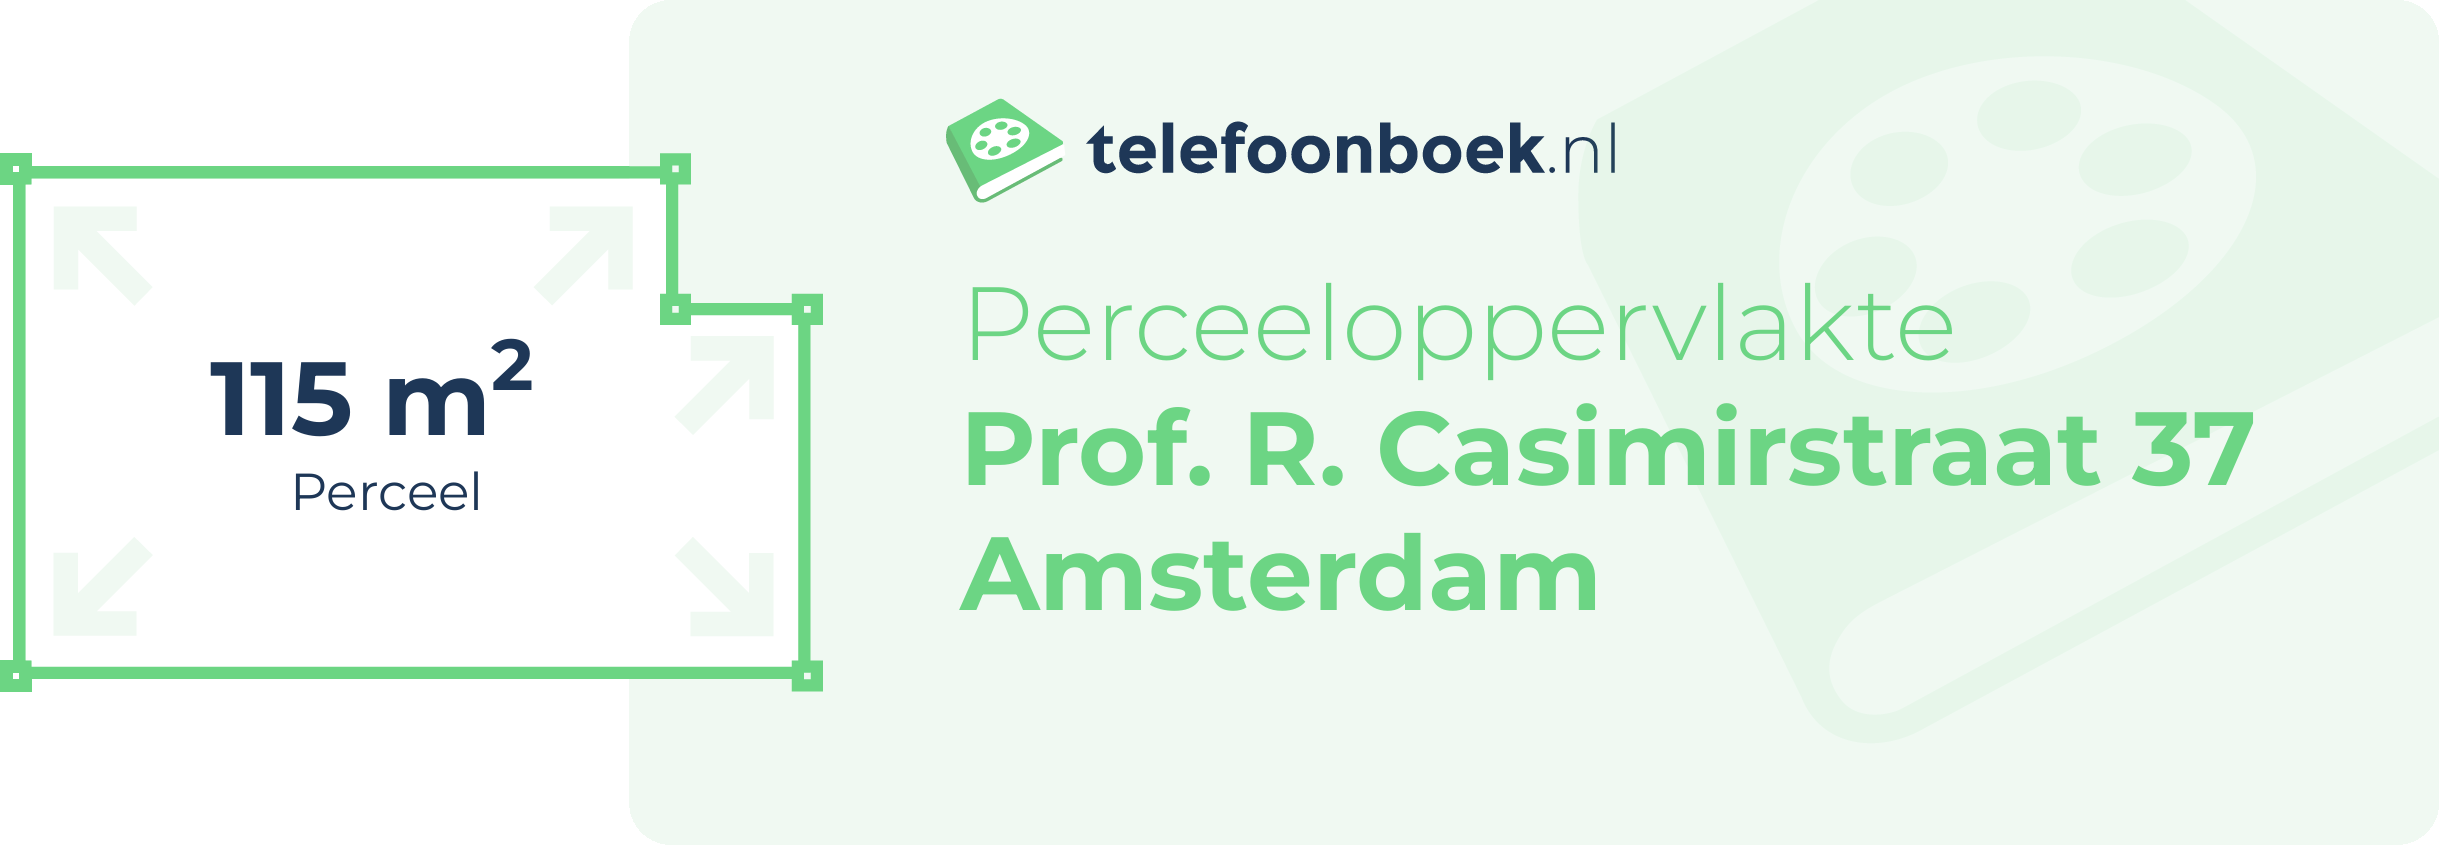 Perceeloppervlakte Prof. R. Casimirstraat 37 Amsterdam